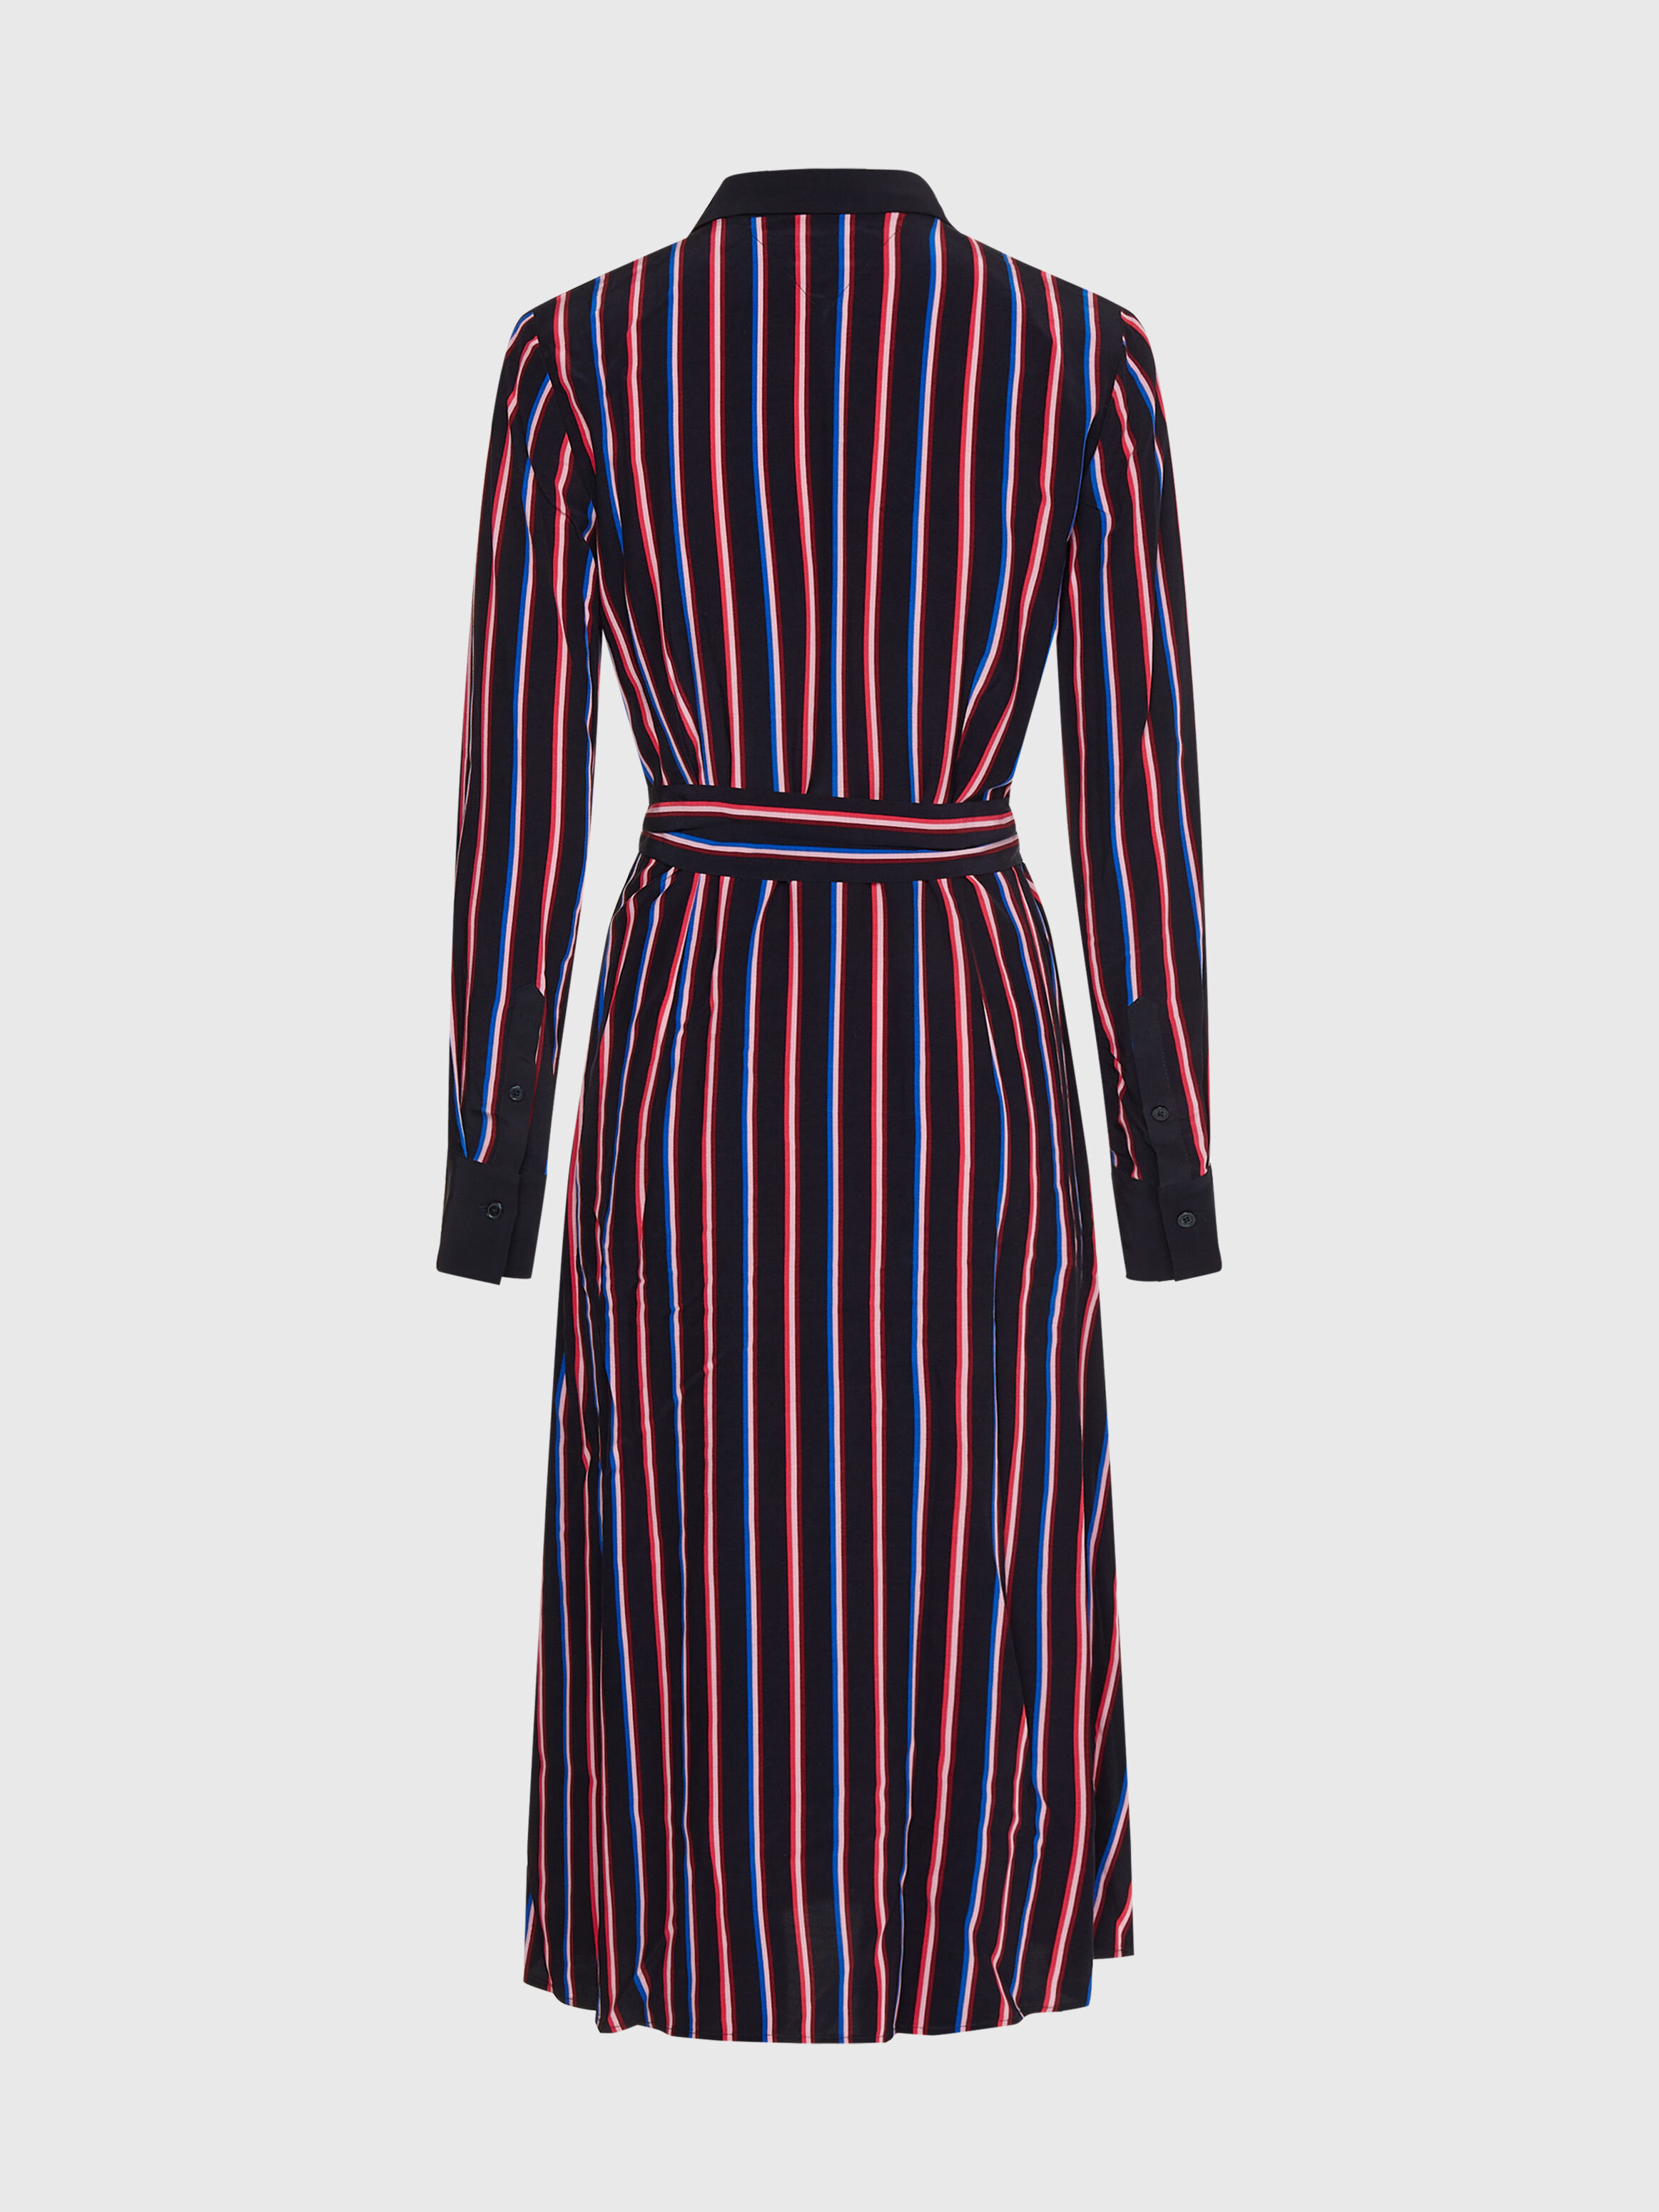 MYLAN マイラン Stripe Shirt Dress smcint.com